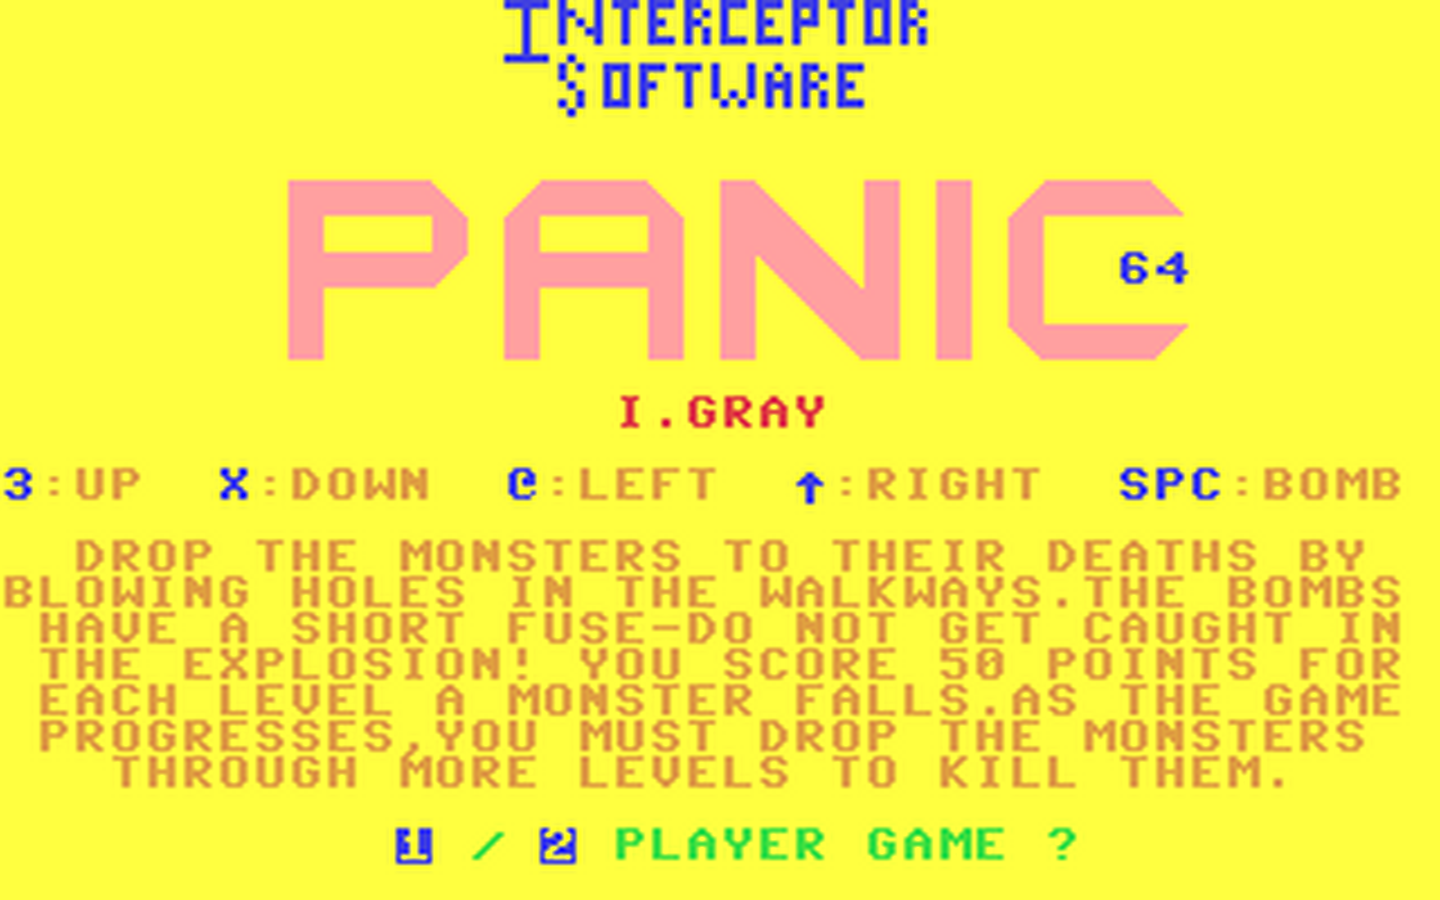 C64 GameBase Panic_64 Interceptor_Software 1983